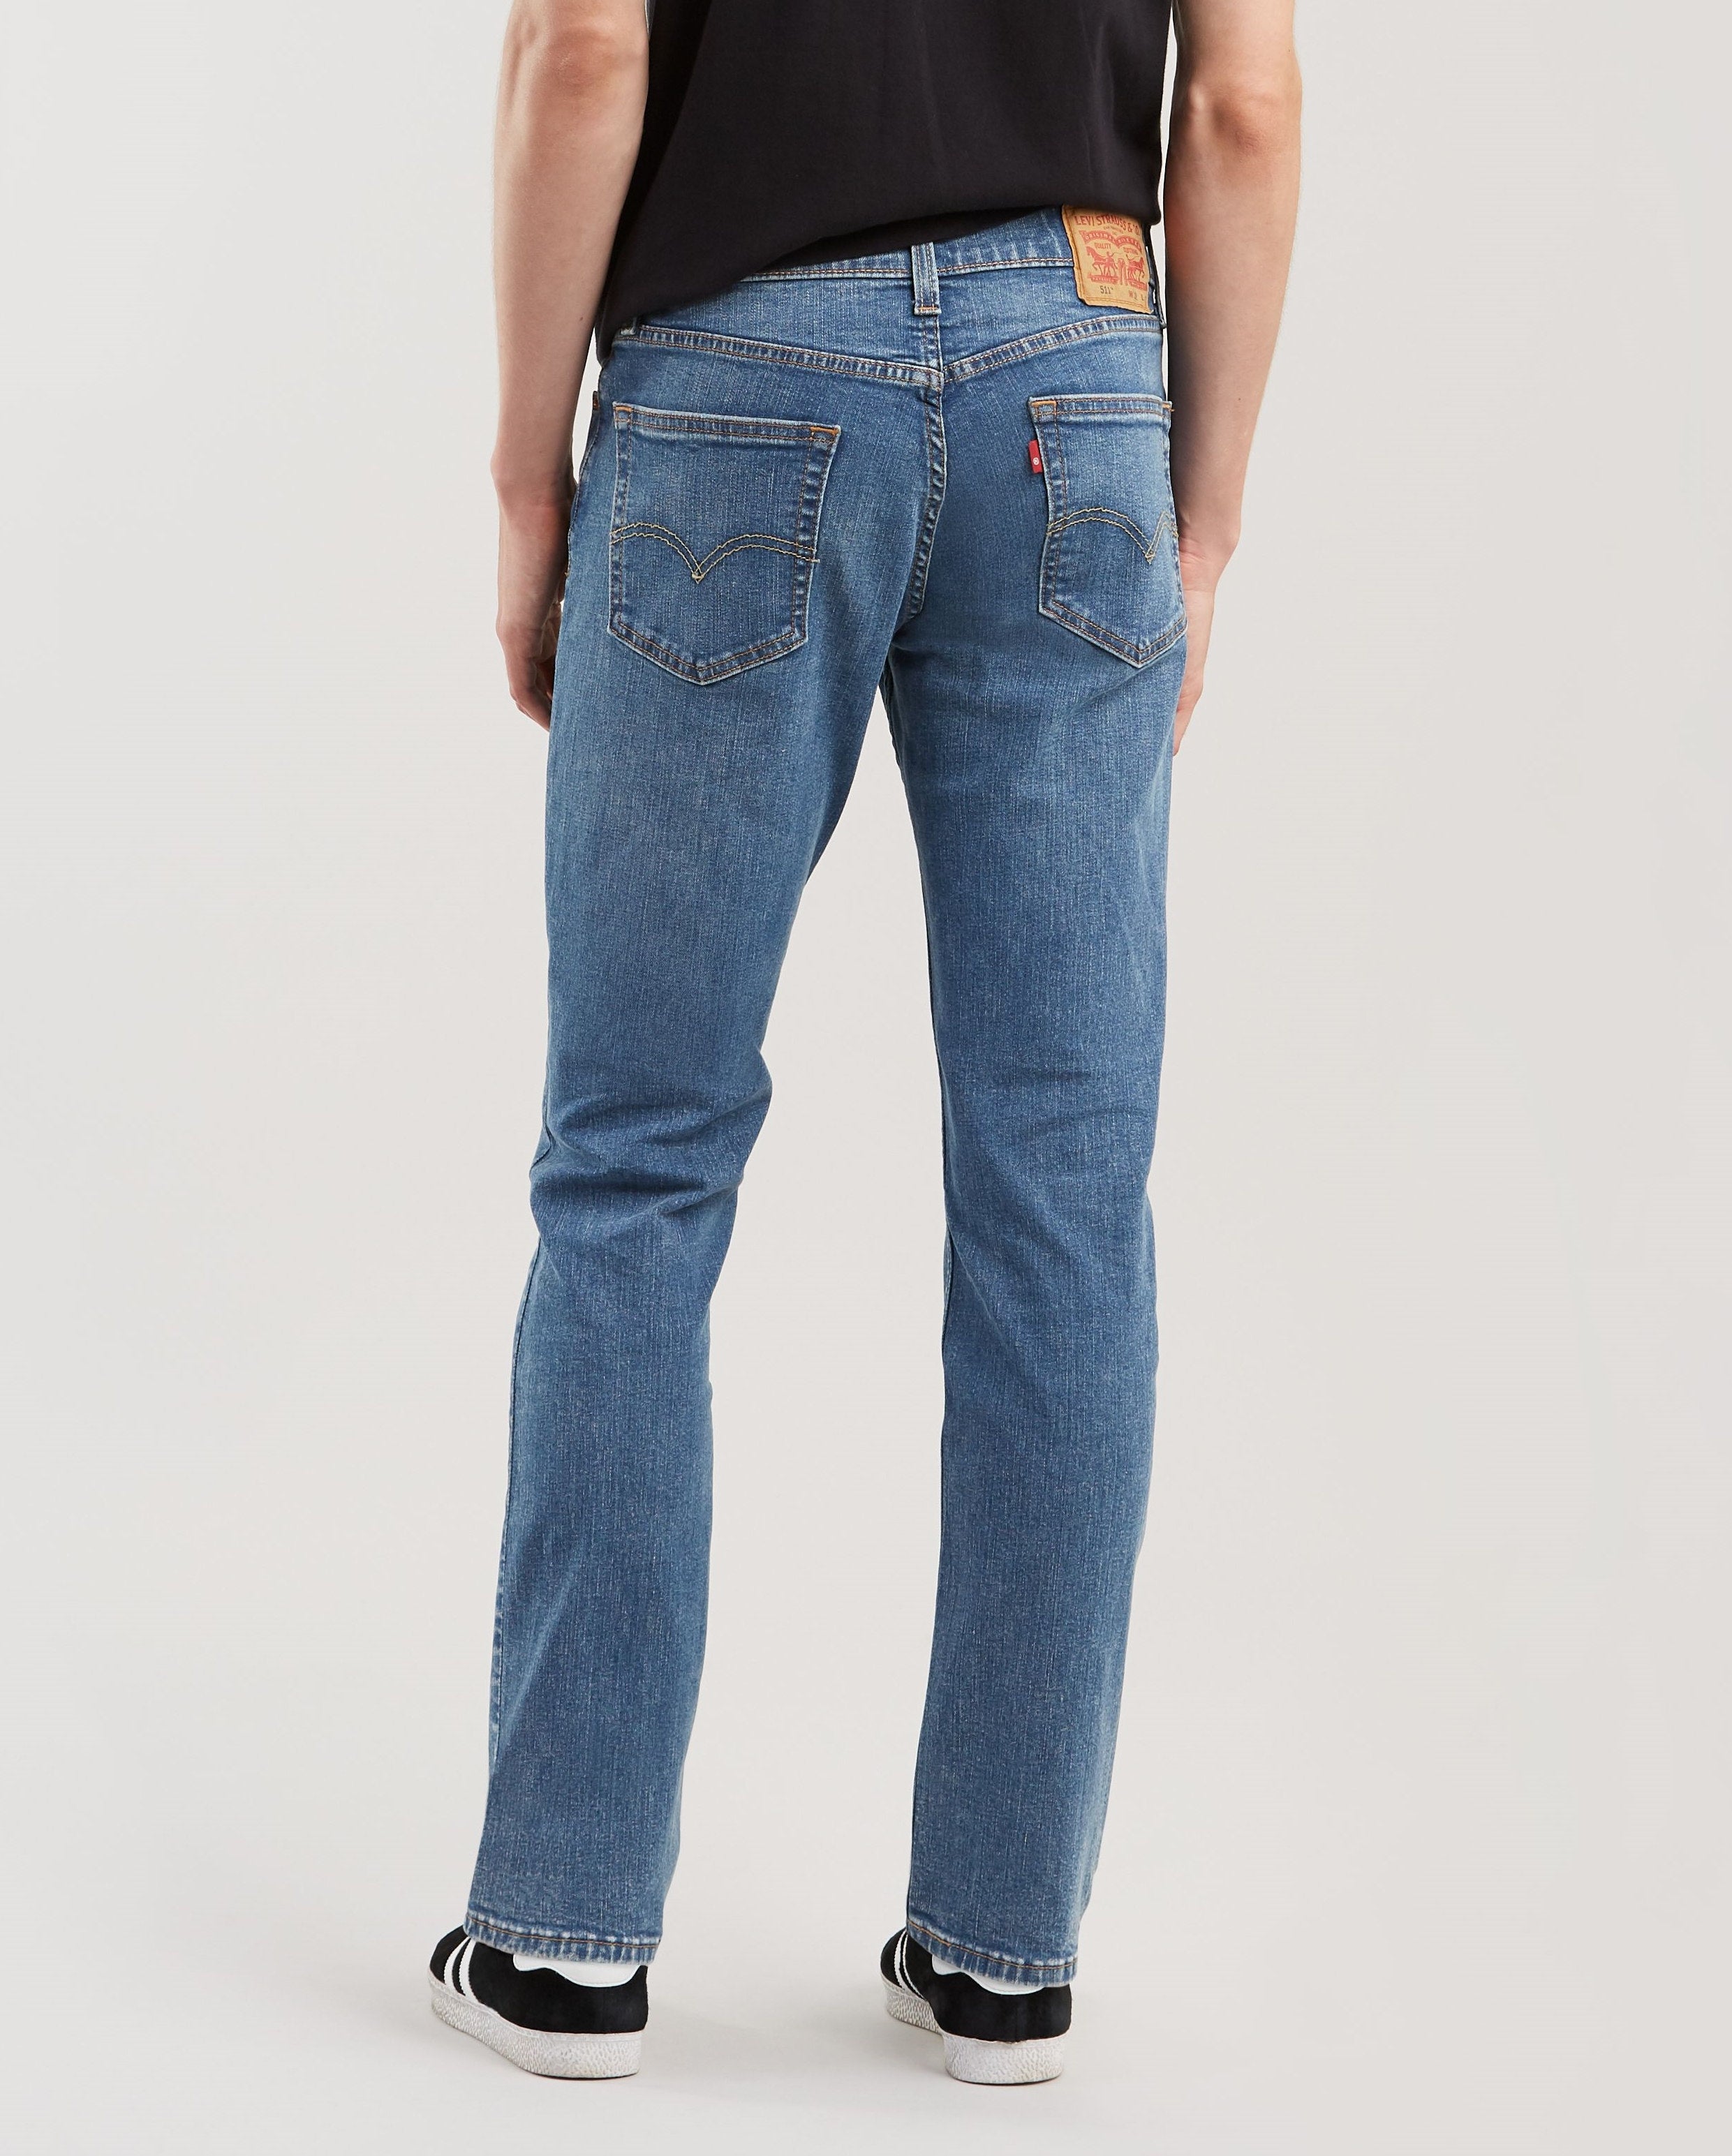 pantalones-jeans-levis-slim-511-p-caballeros